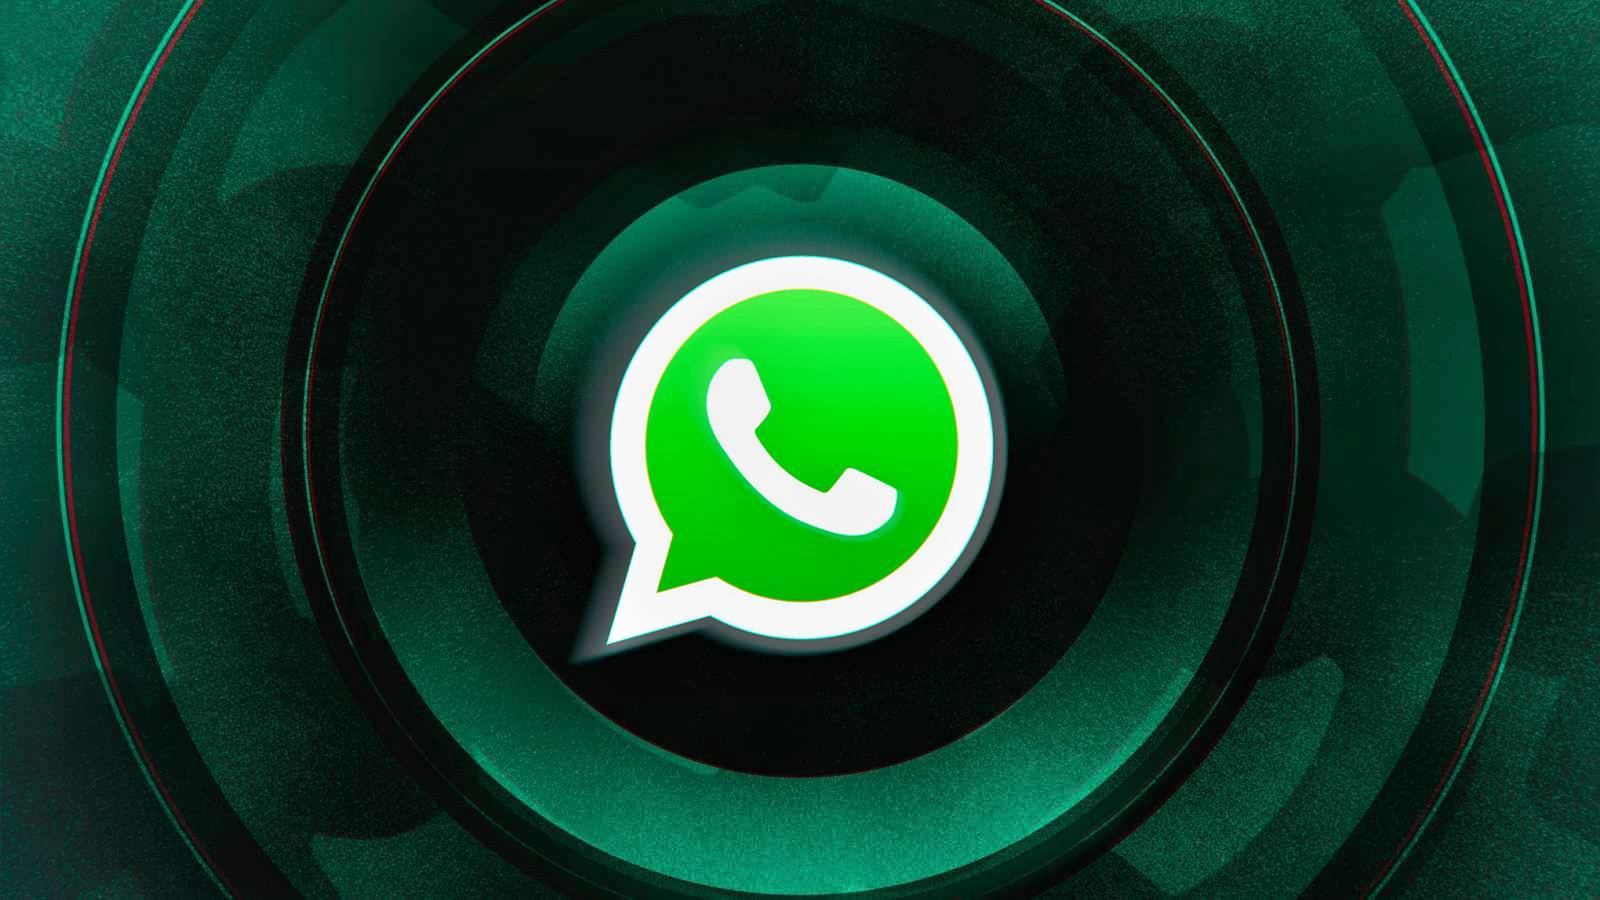 WhatsApp Preia Noua Functie IMPORTANTA Facebook iPhone Android